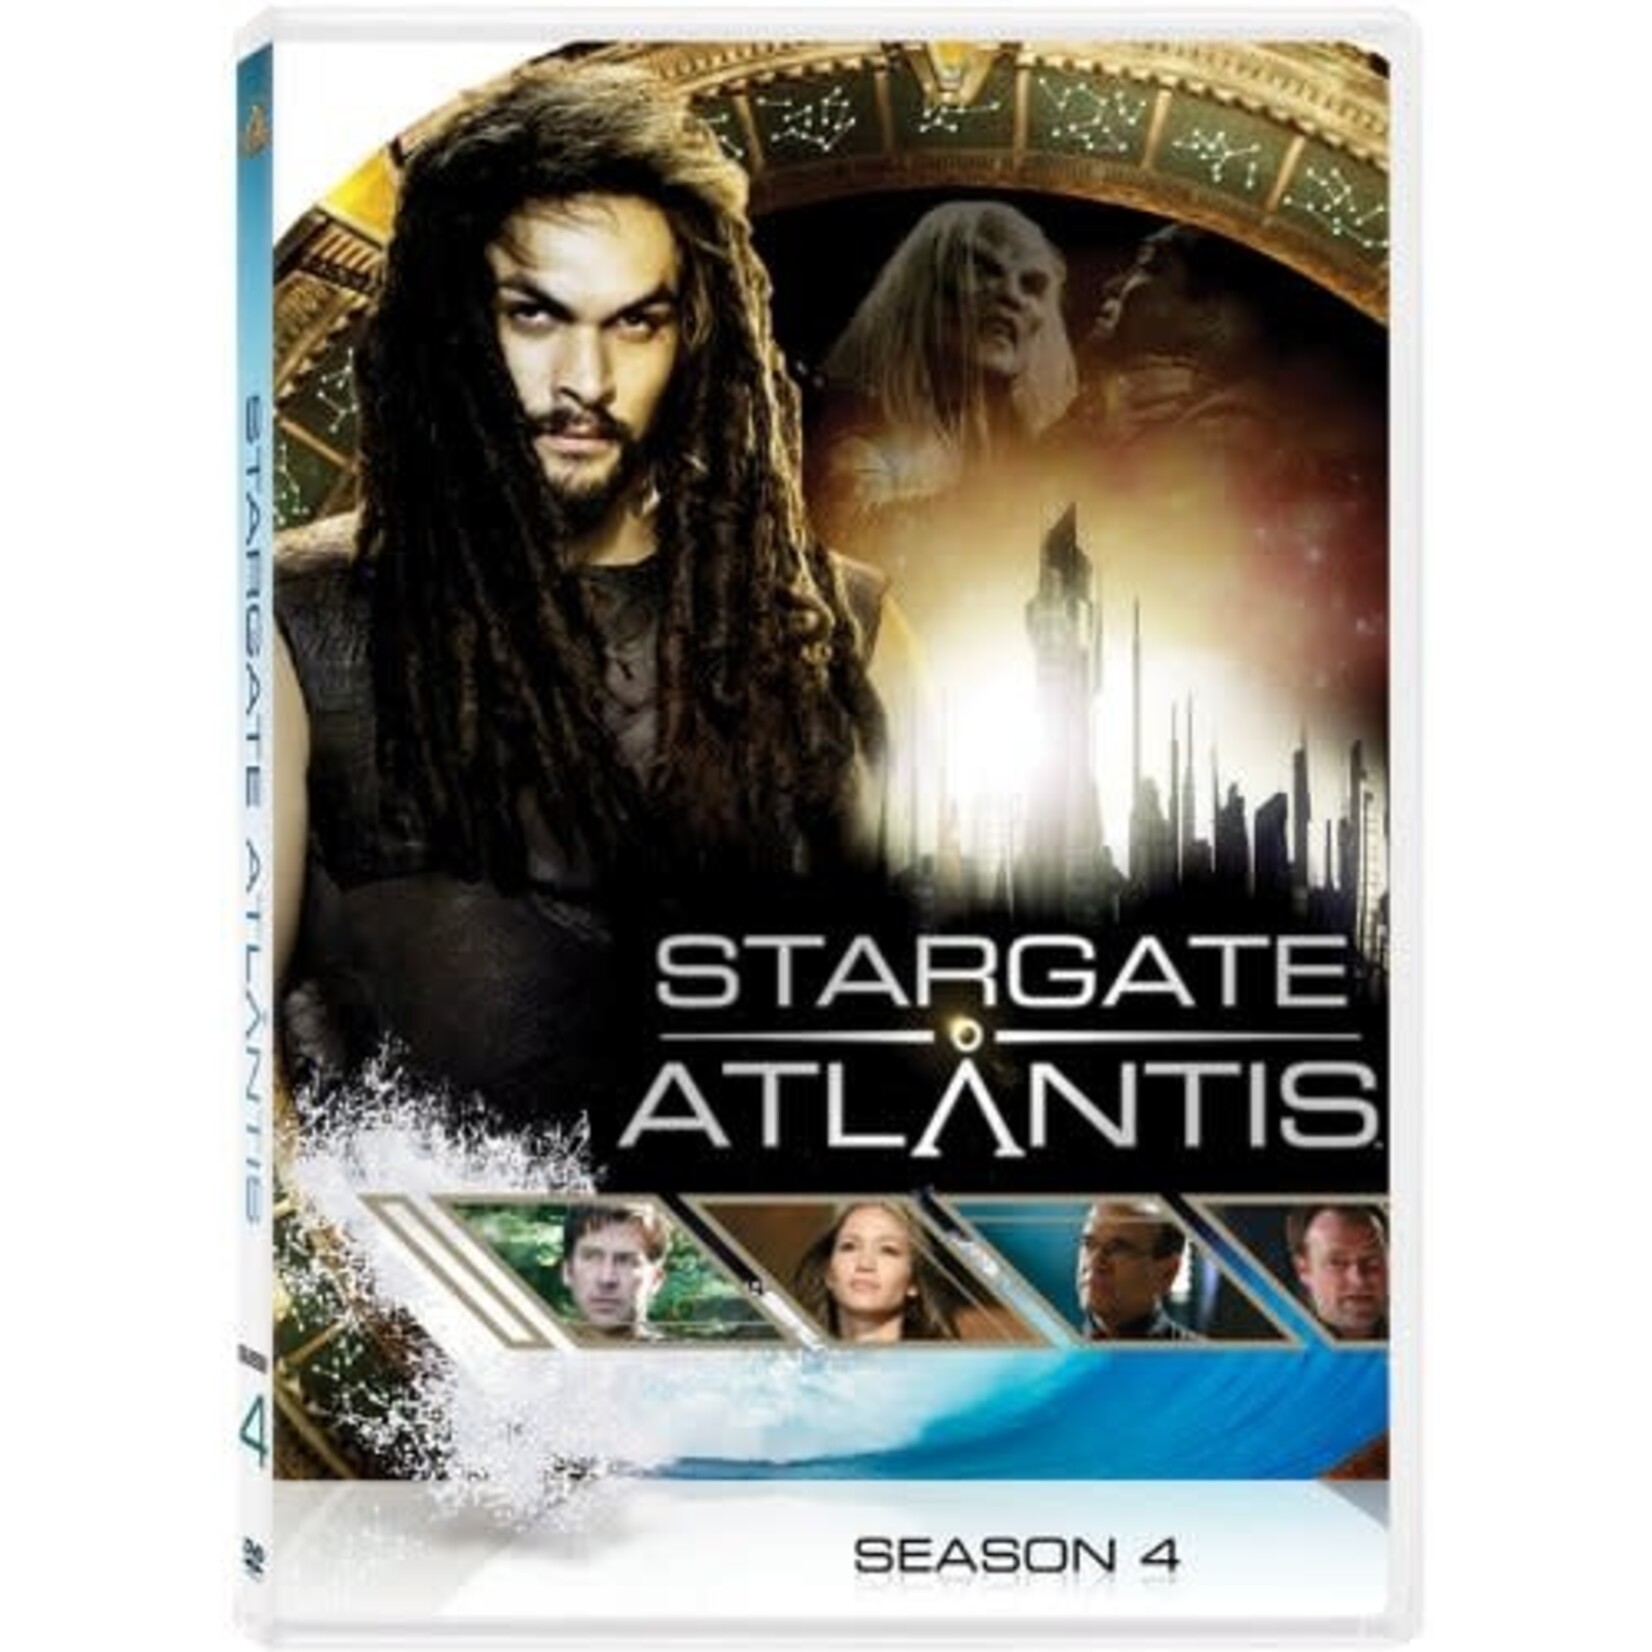 Stargate: Atlantis - Season 4 [USED DVD]